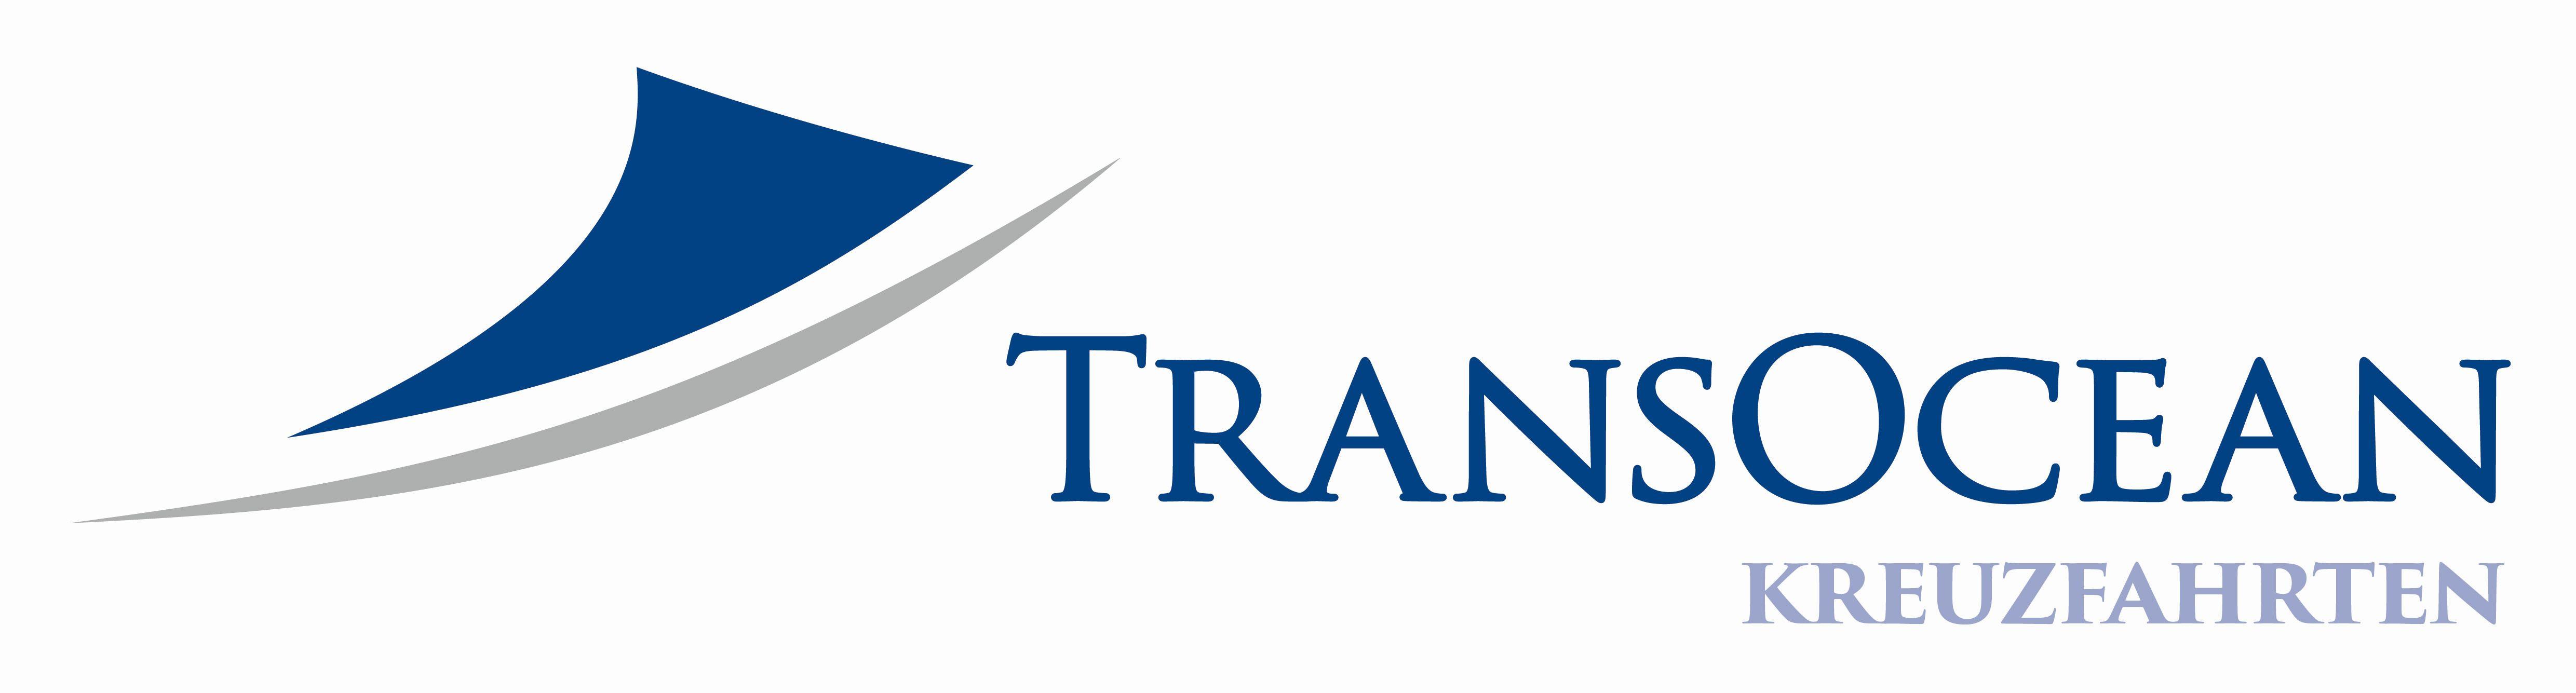 Transocean Logo - TransOcean mit neuem Markenauftritt « AZUR° Das Kreuzfahrtmagazin